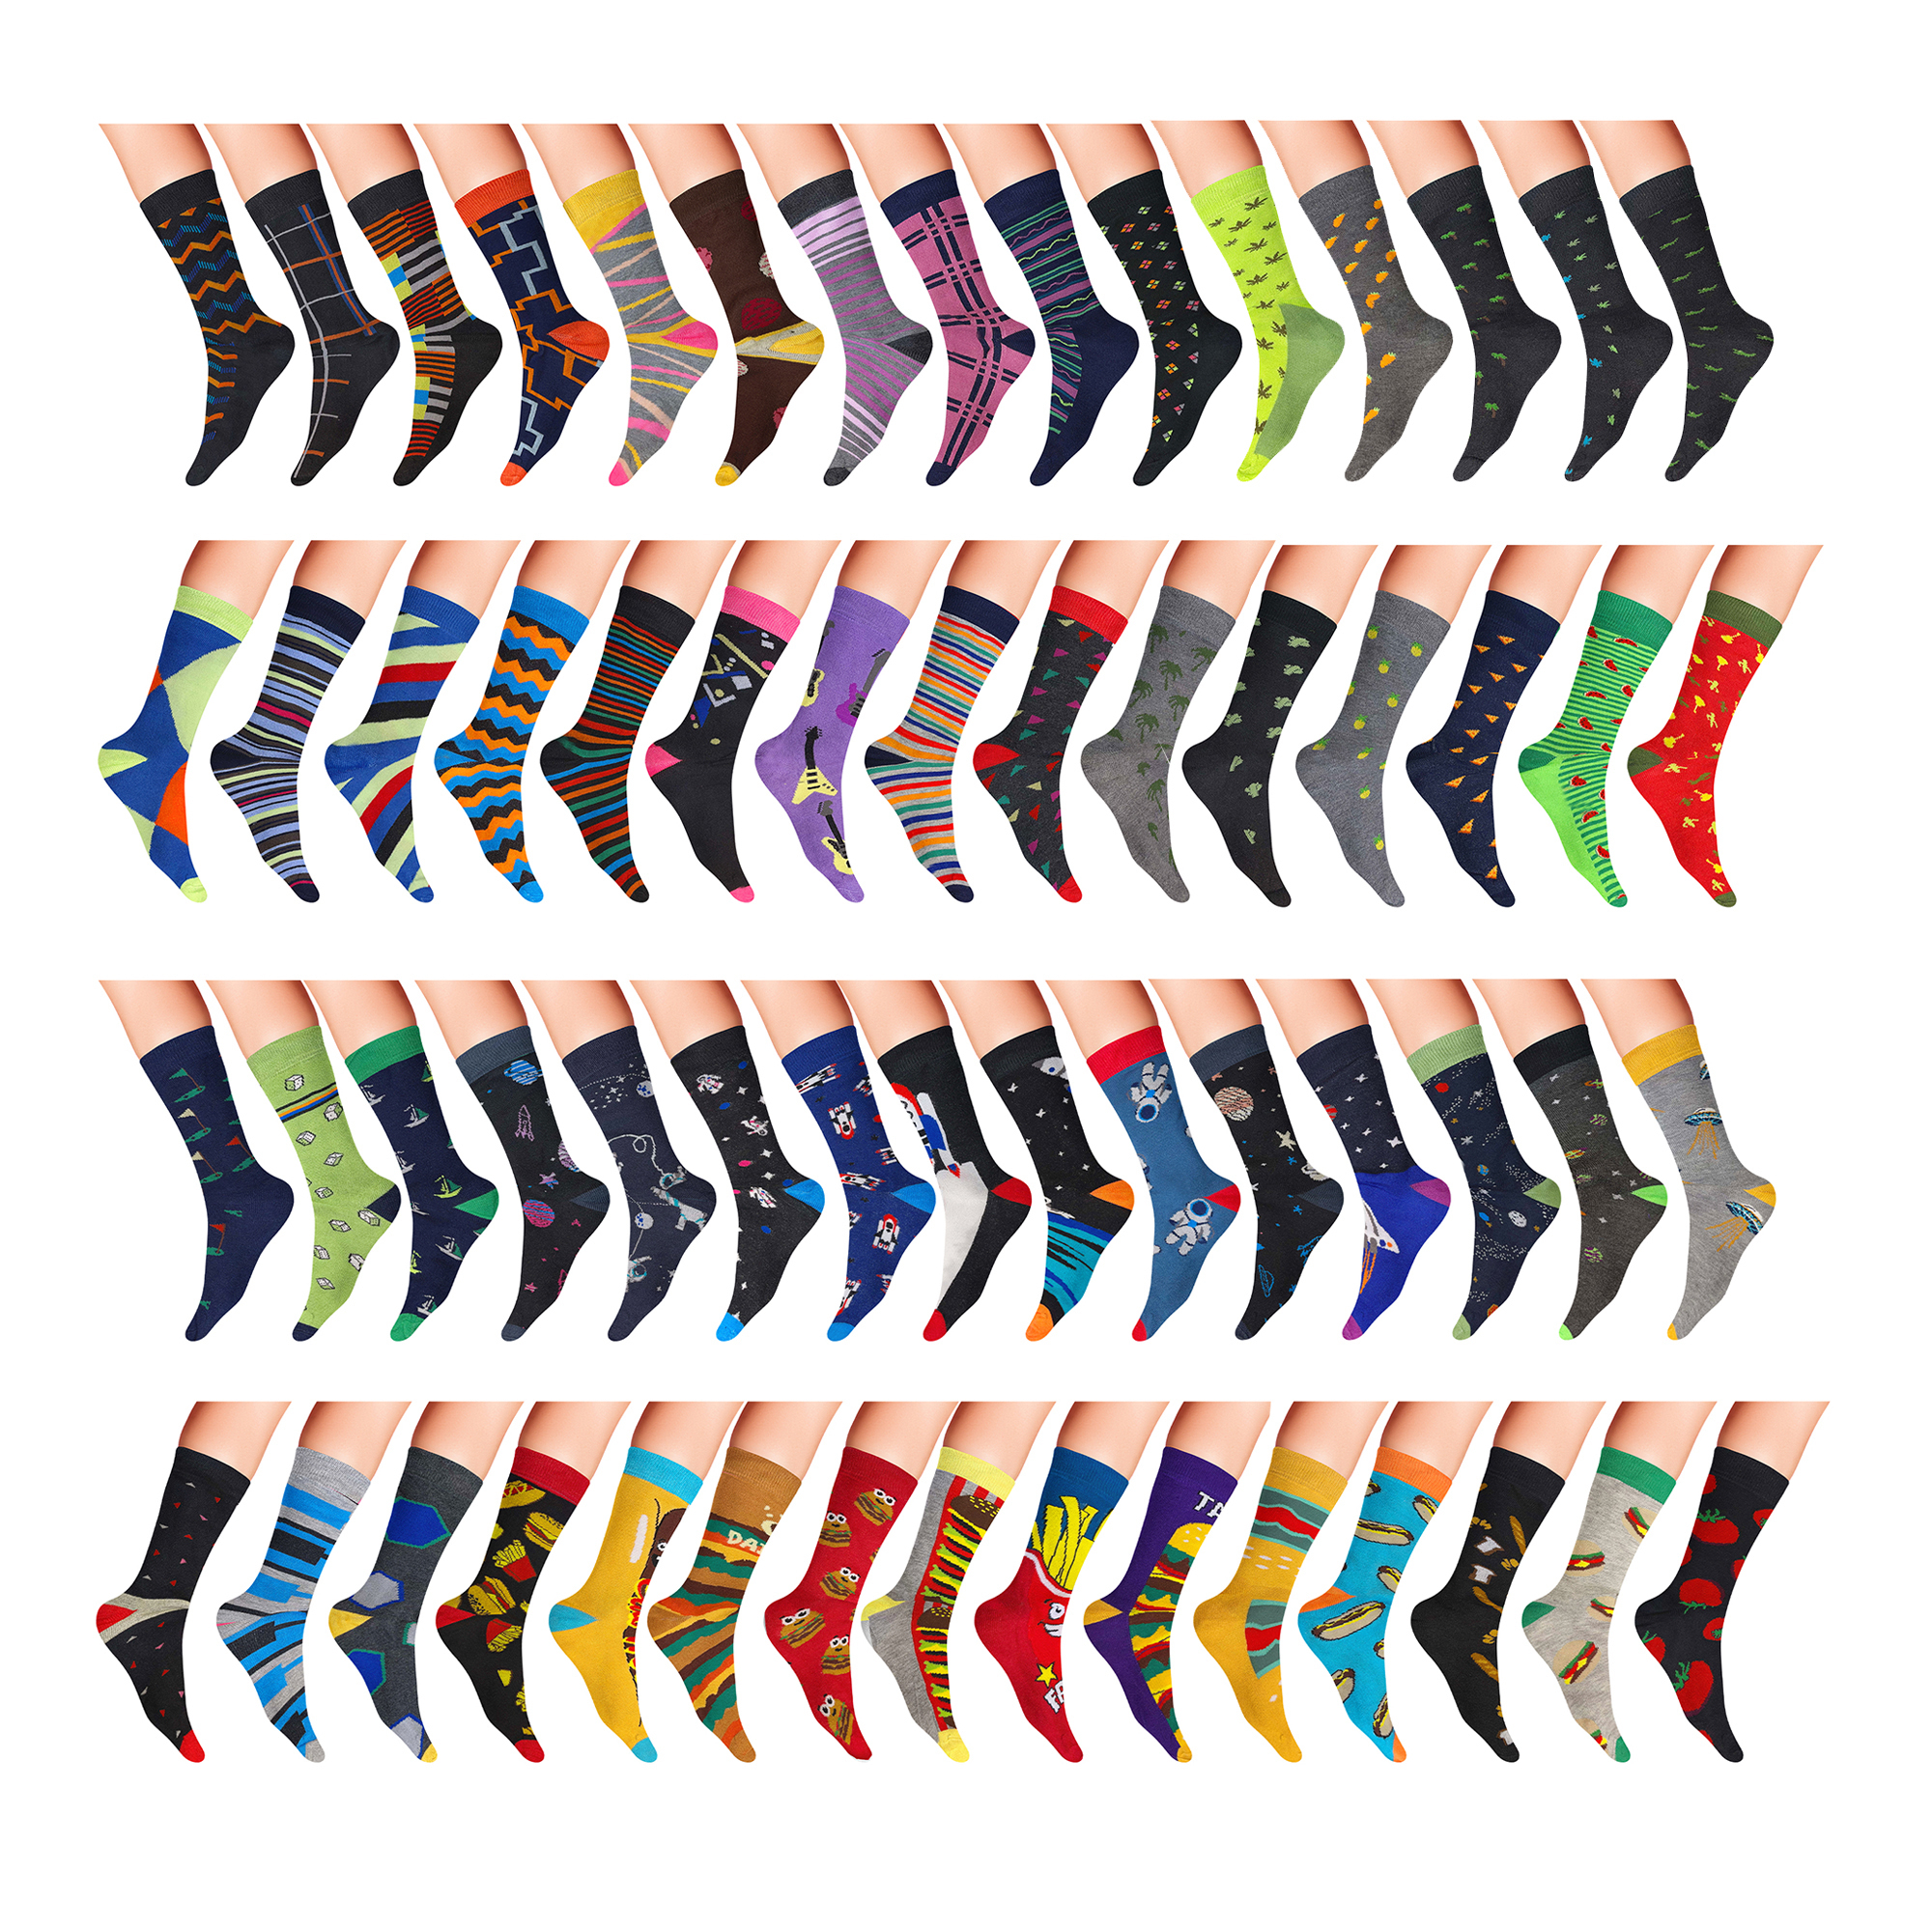 Mystery Deal: Multi-Pair James Fiallo Men’s Colorful Dress Socks - 24-Pair